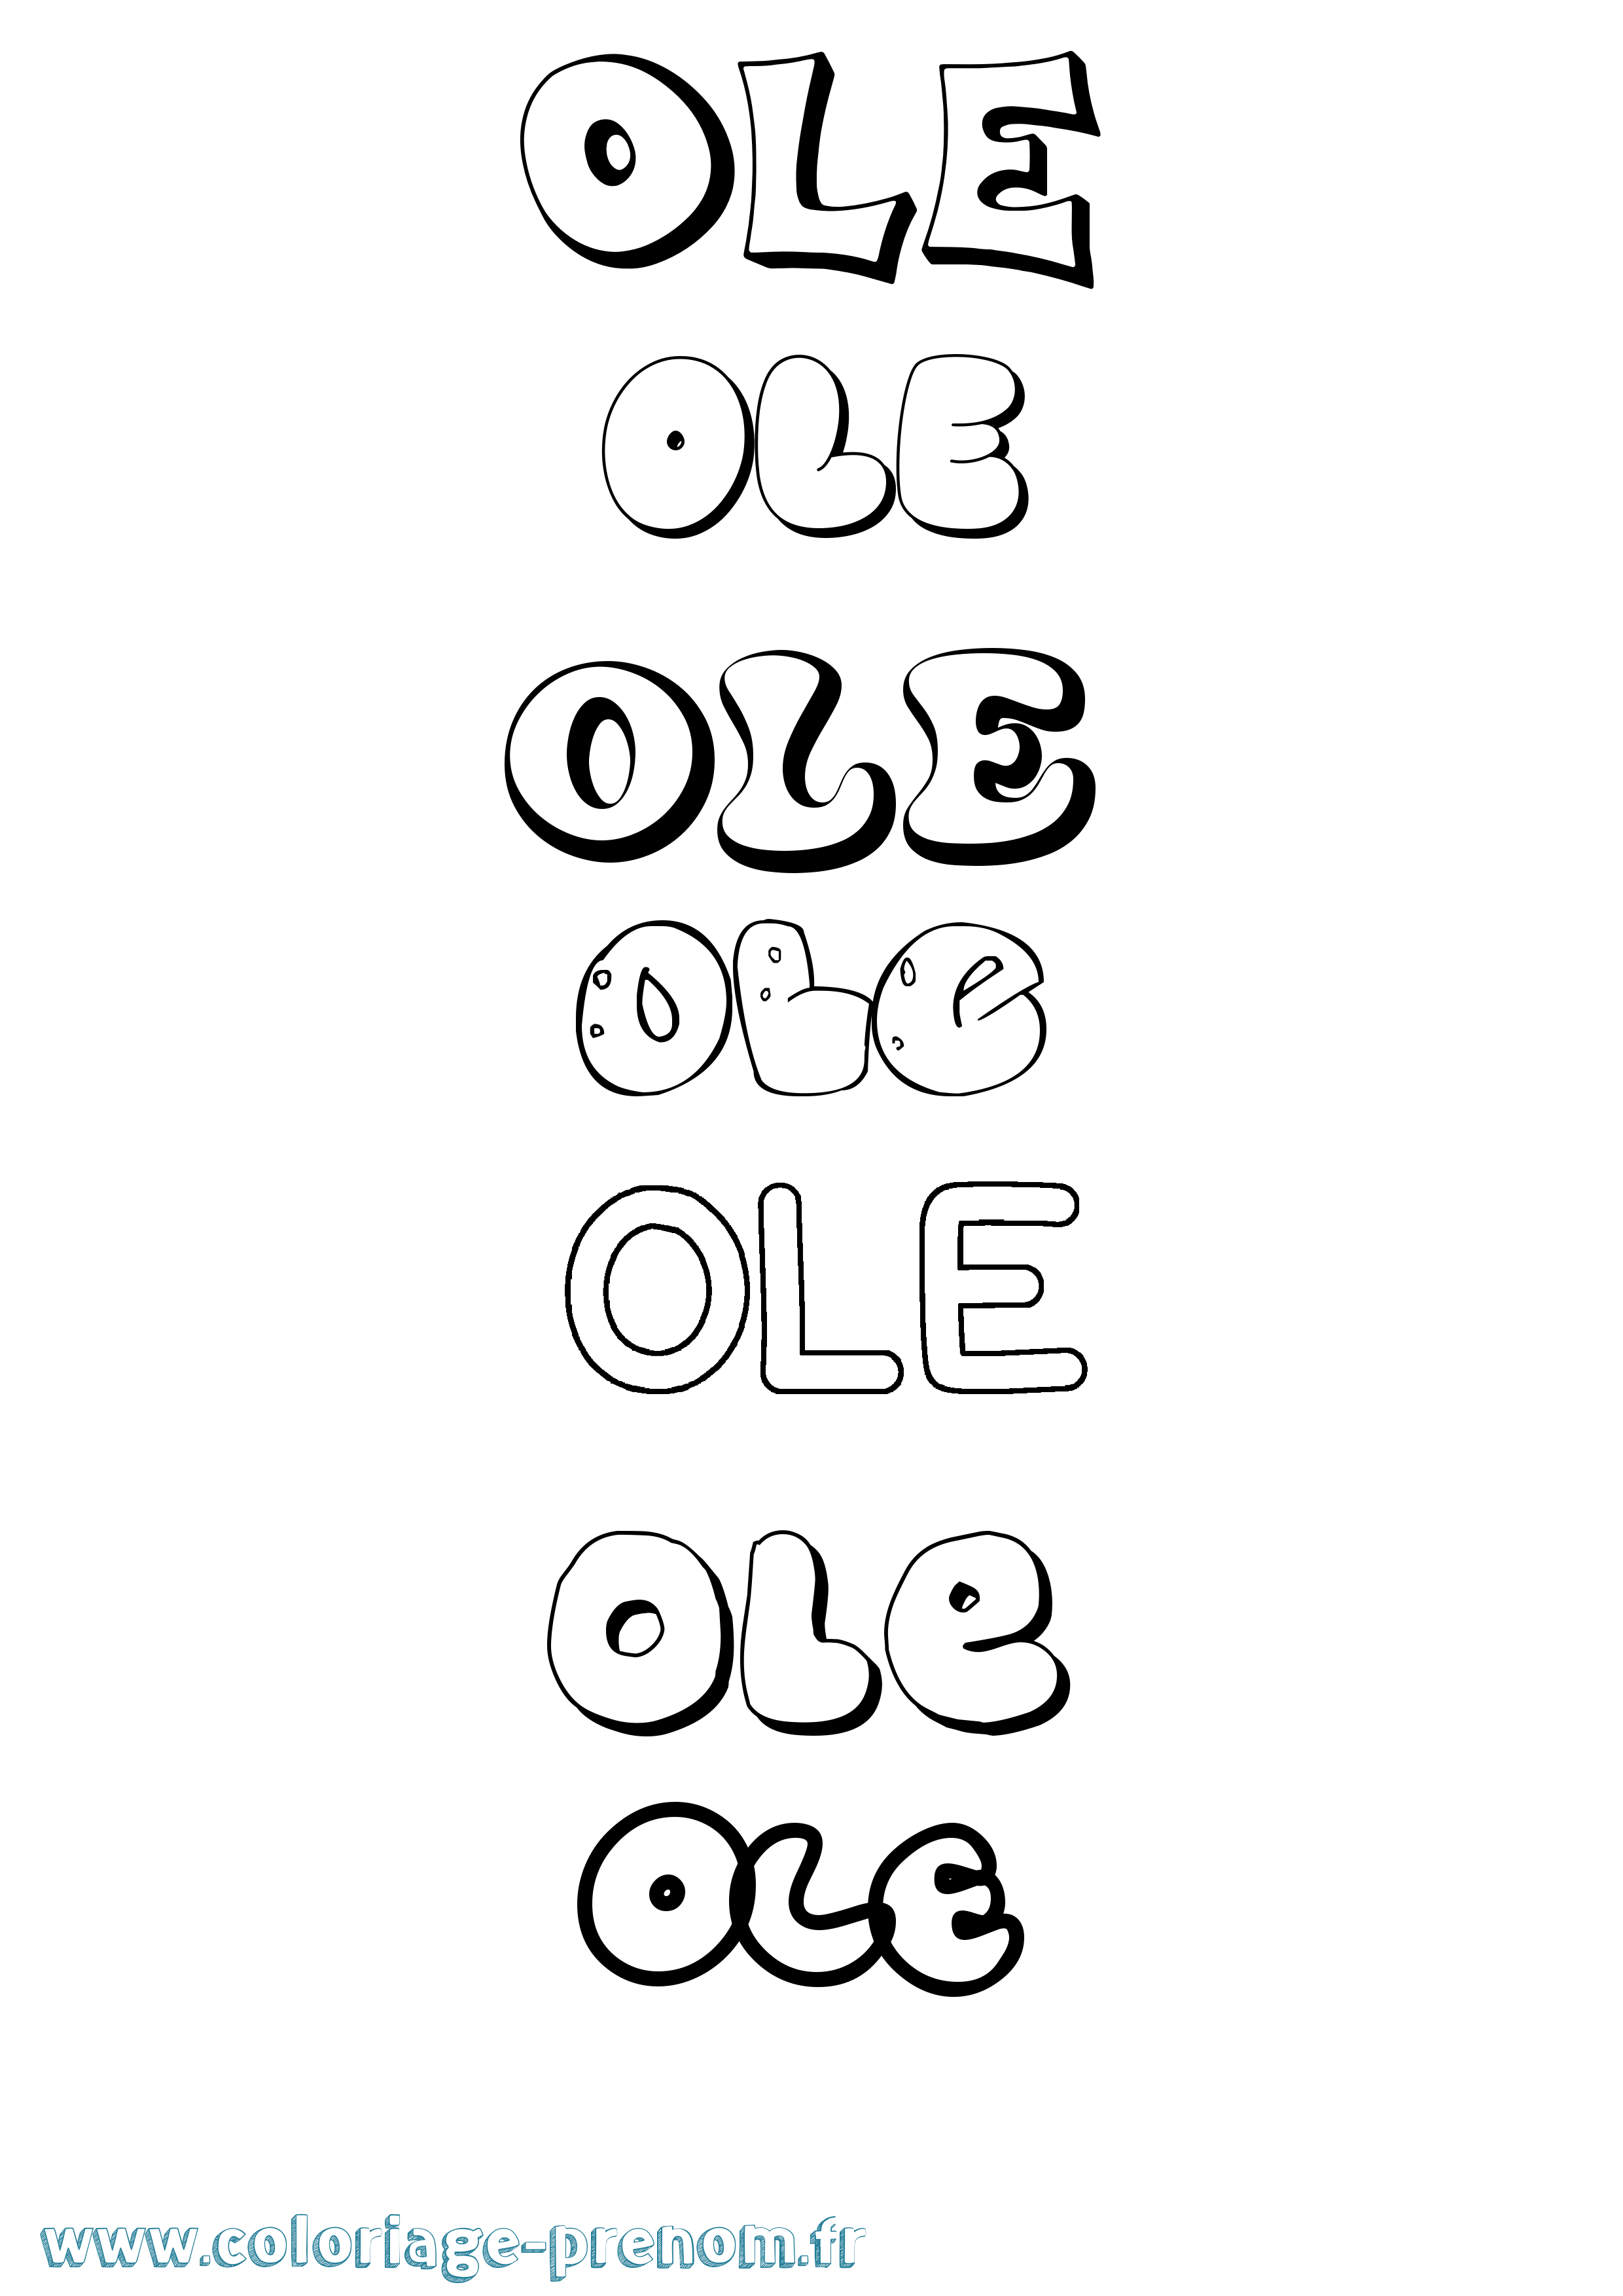 Coloriage prénom Ole Bubble